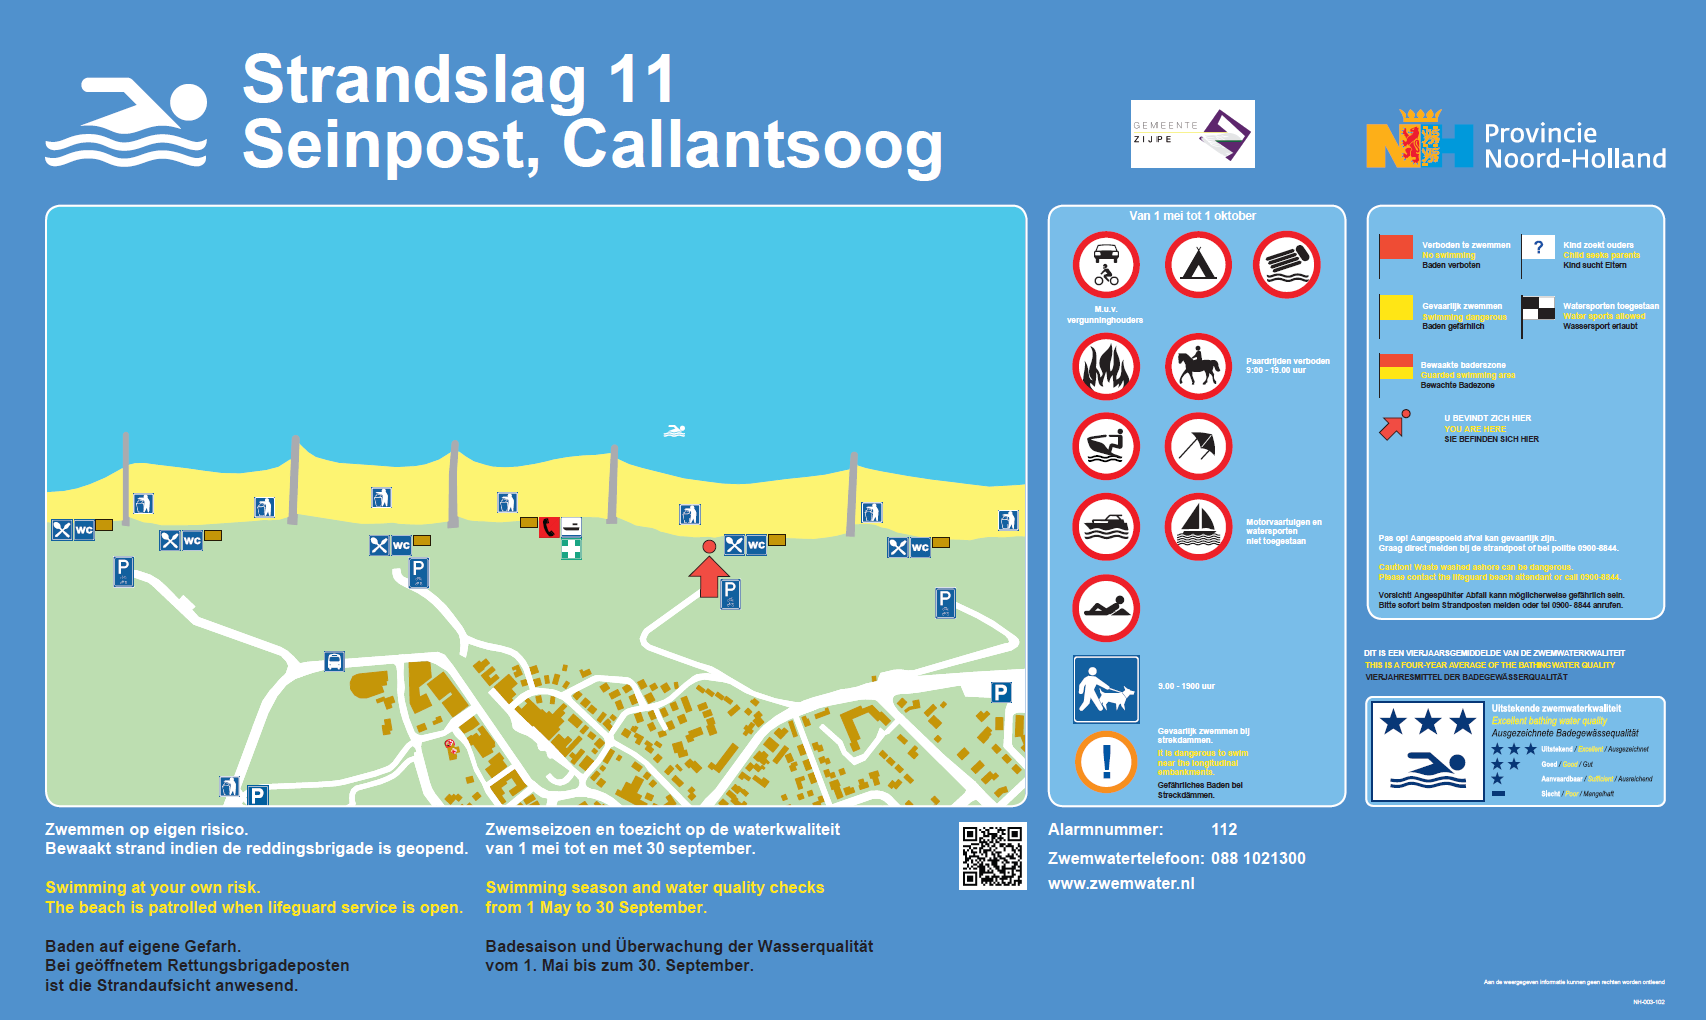 The information board at the swimming location Callantsoog, Strandslag 11 Seinpost